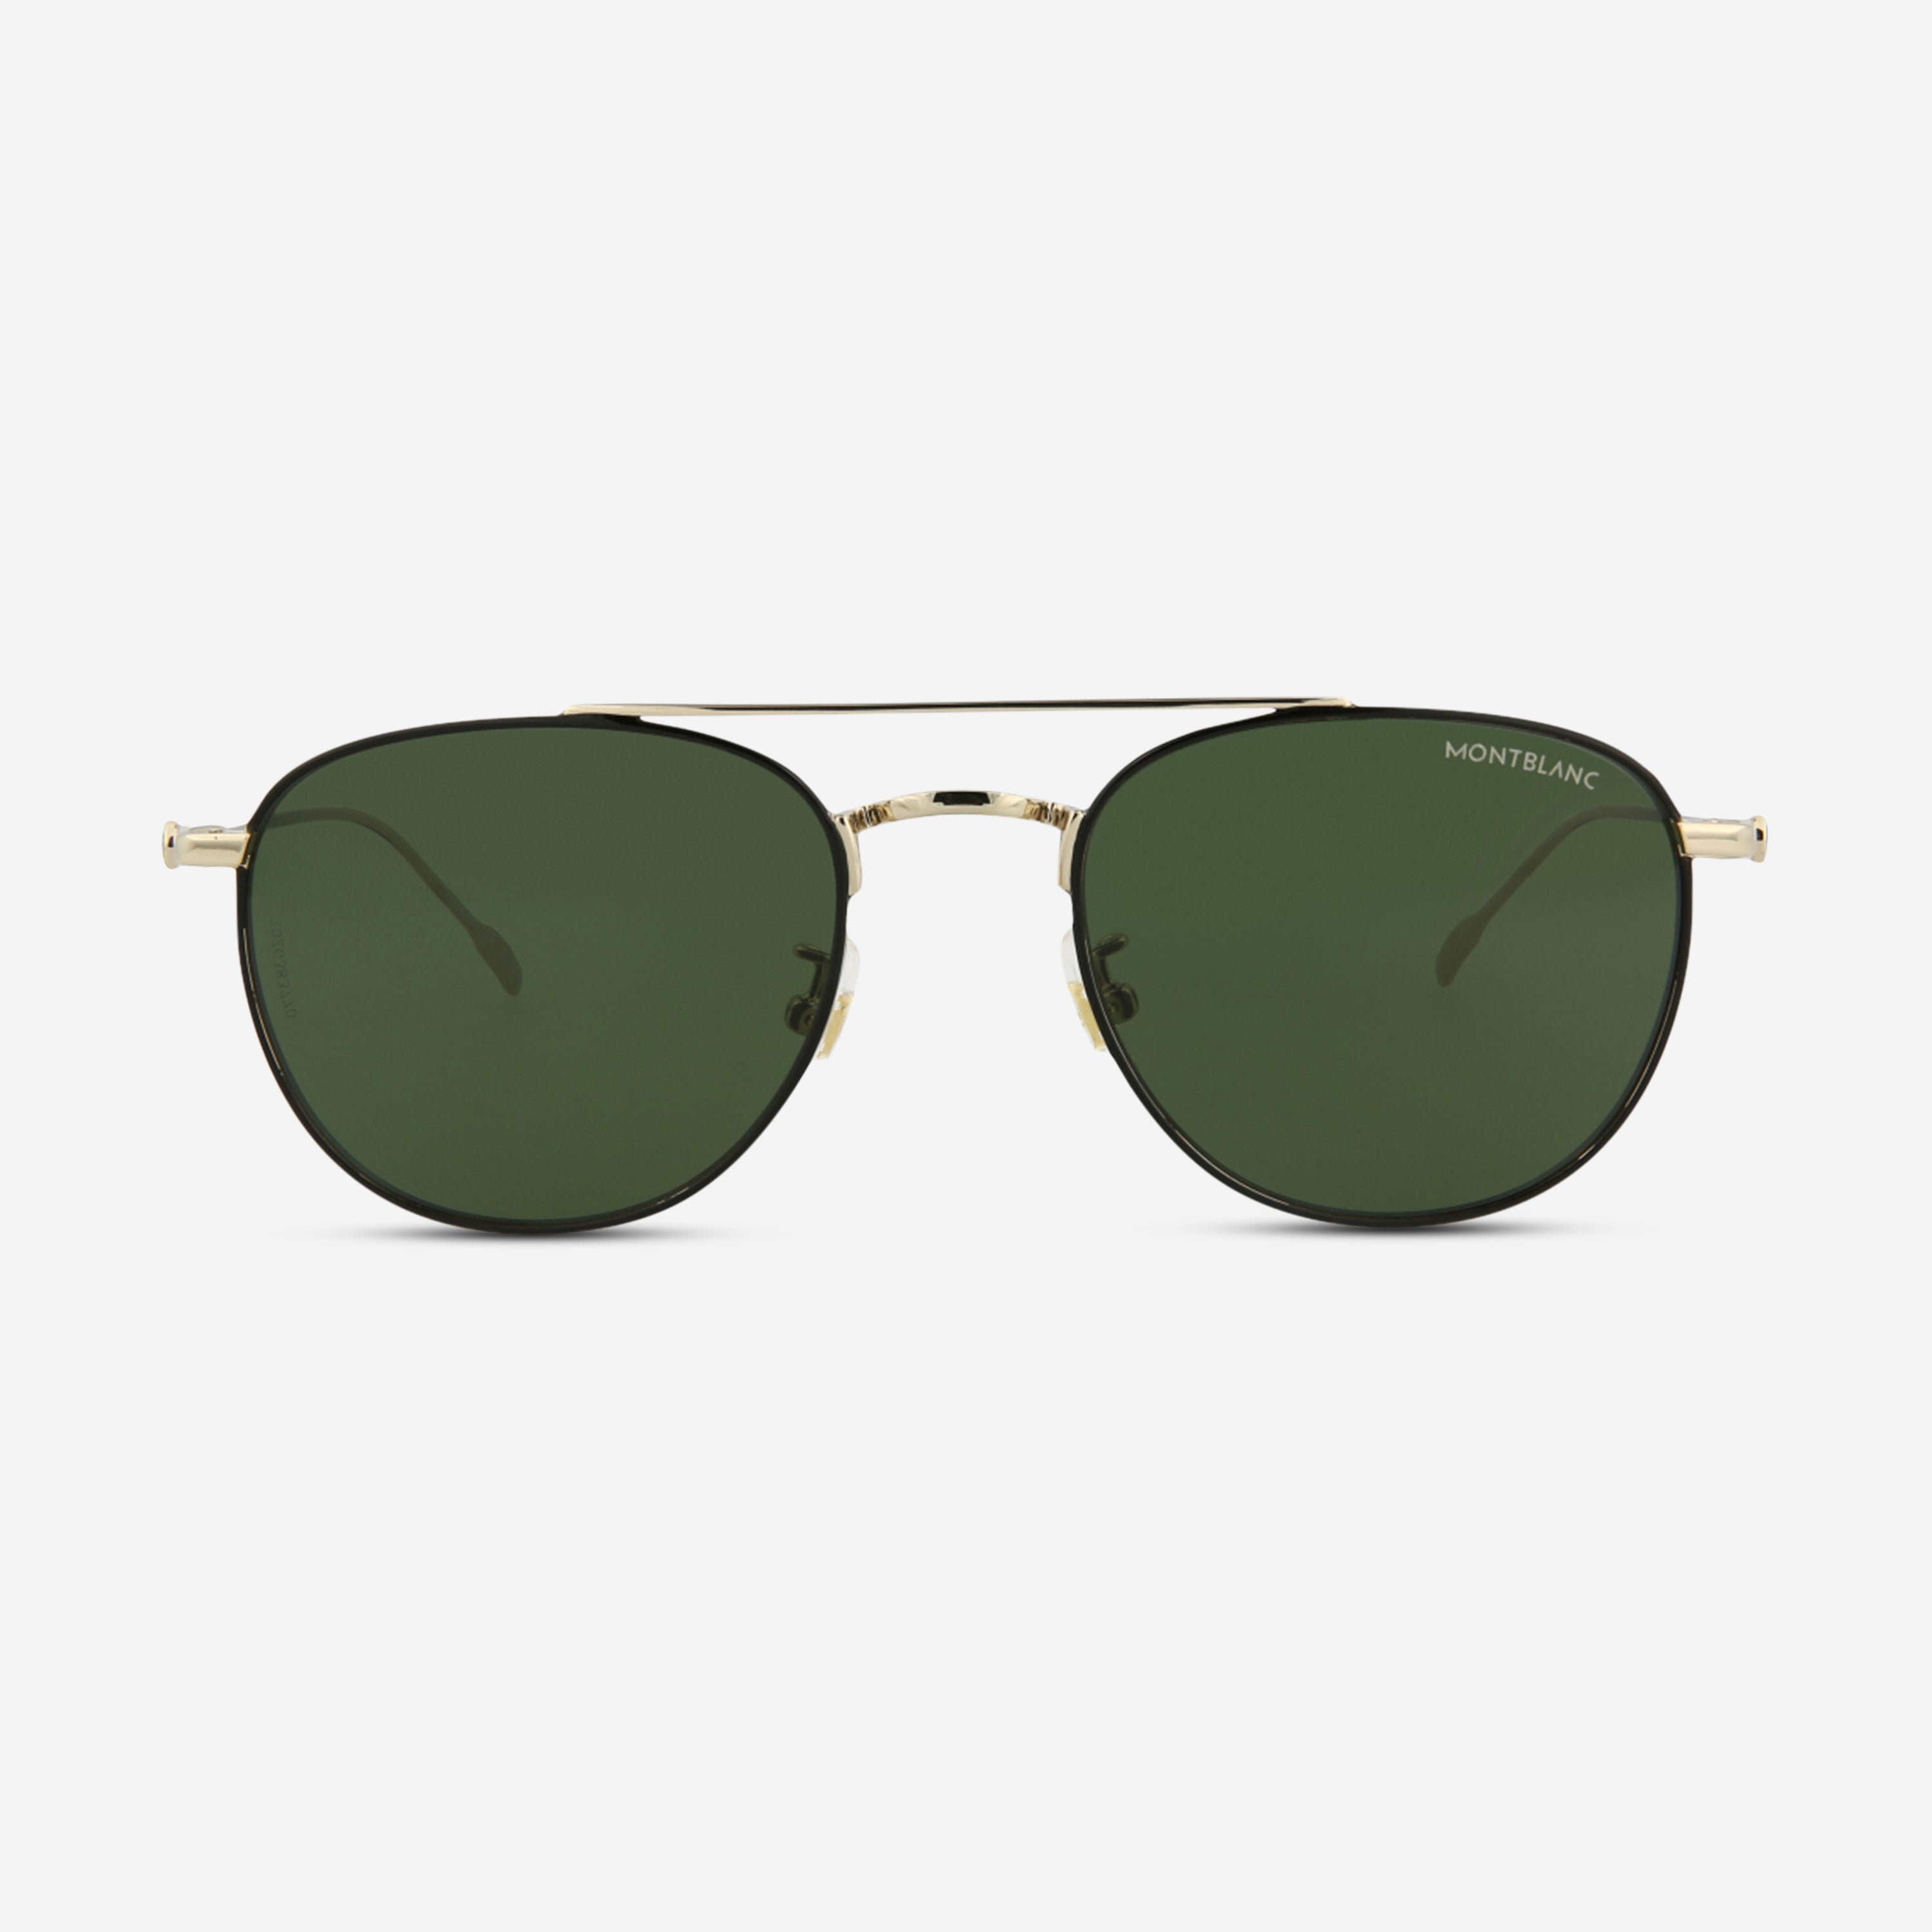 Montblanc Fashion Men's Sunglasses MB0211S-30012091004